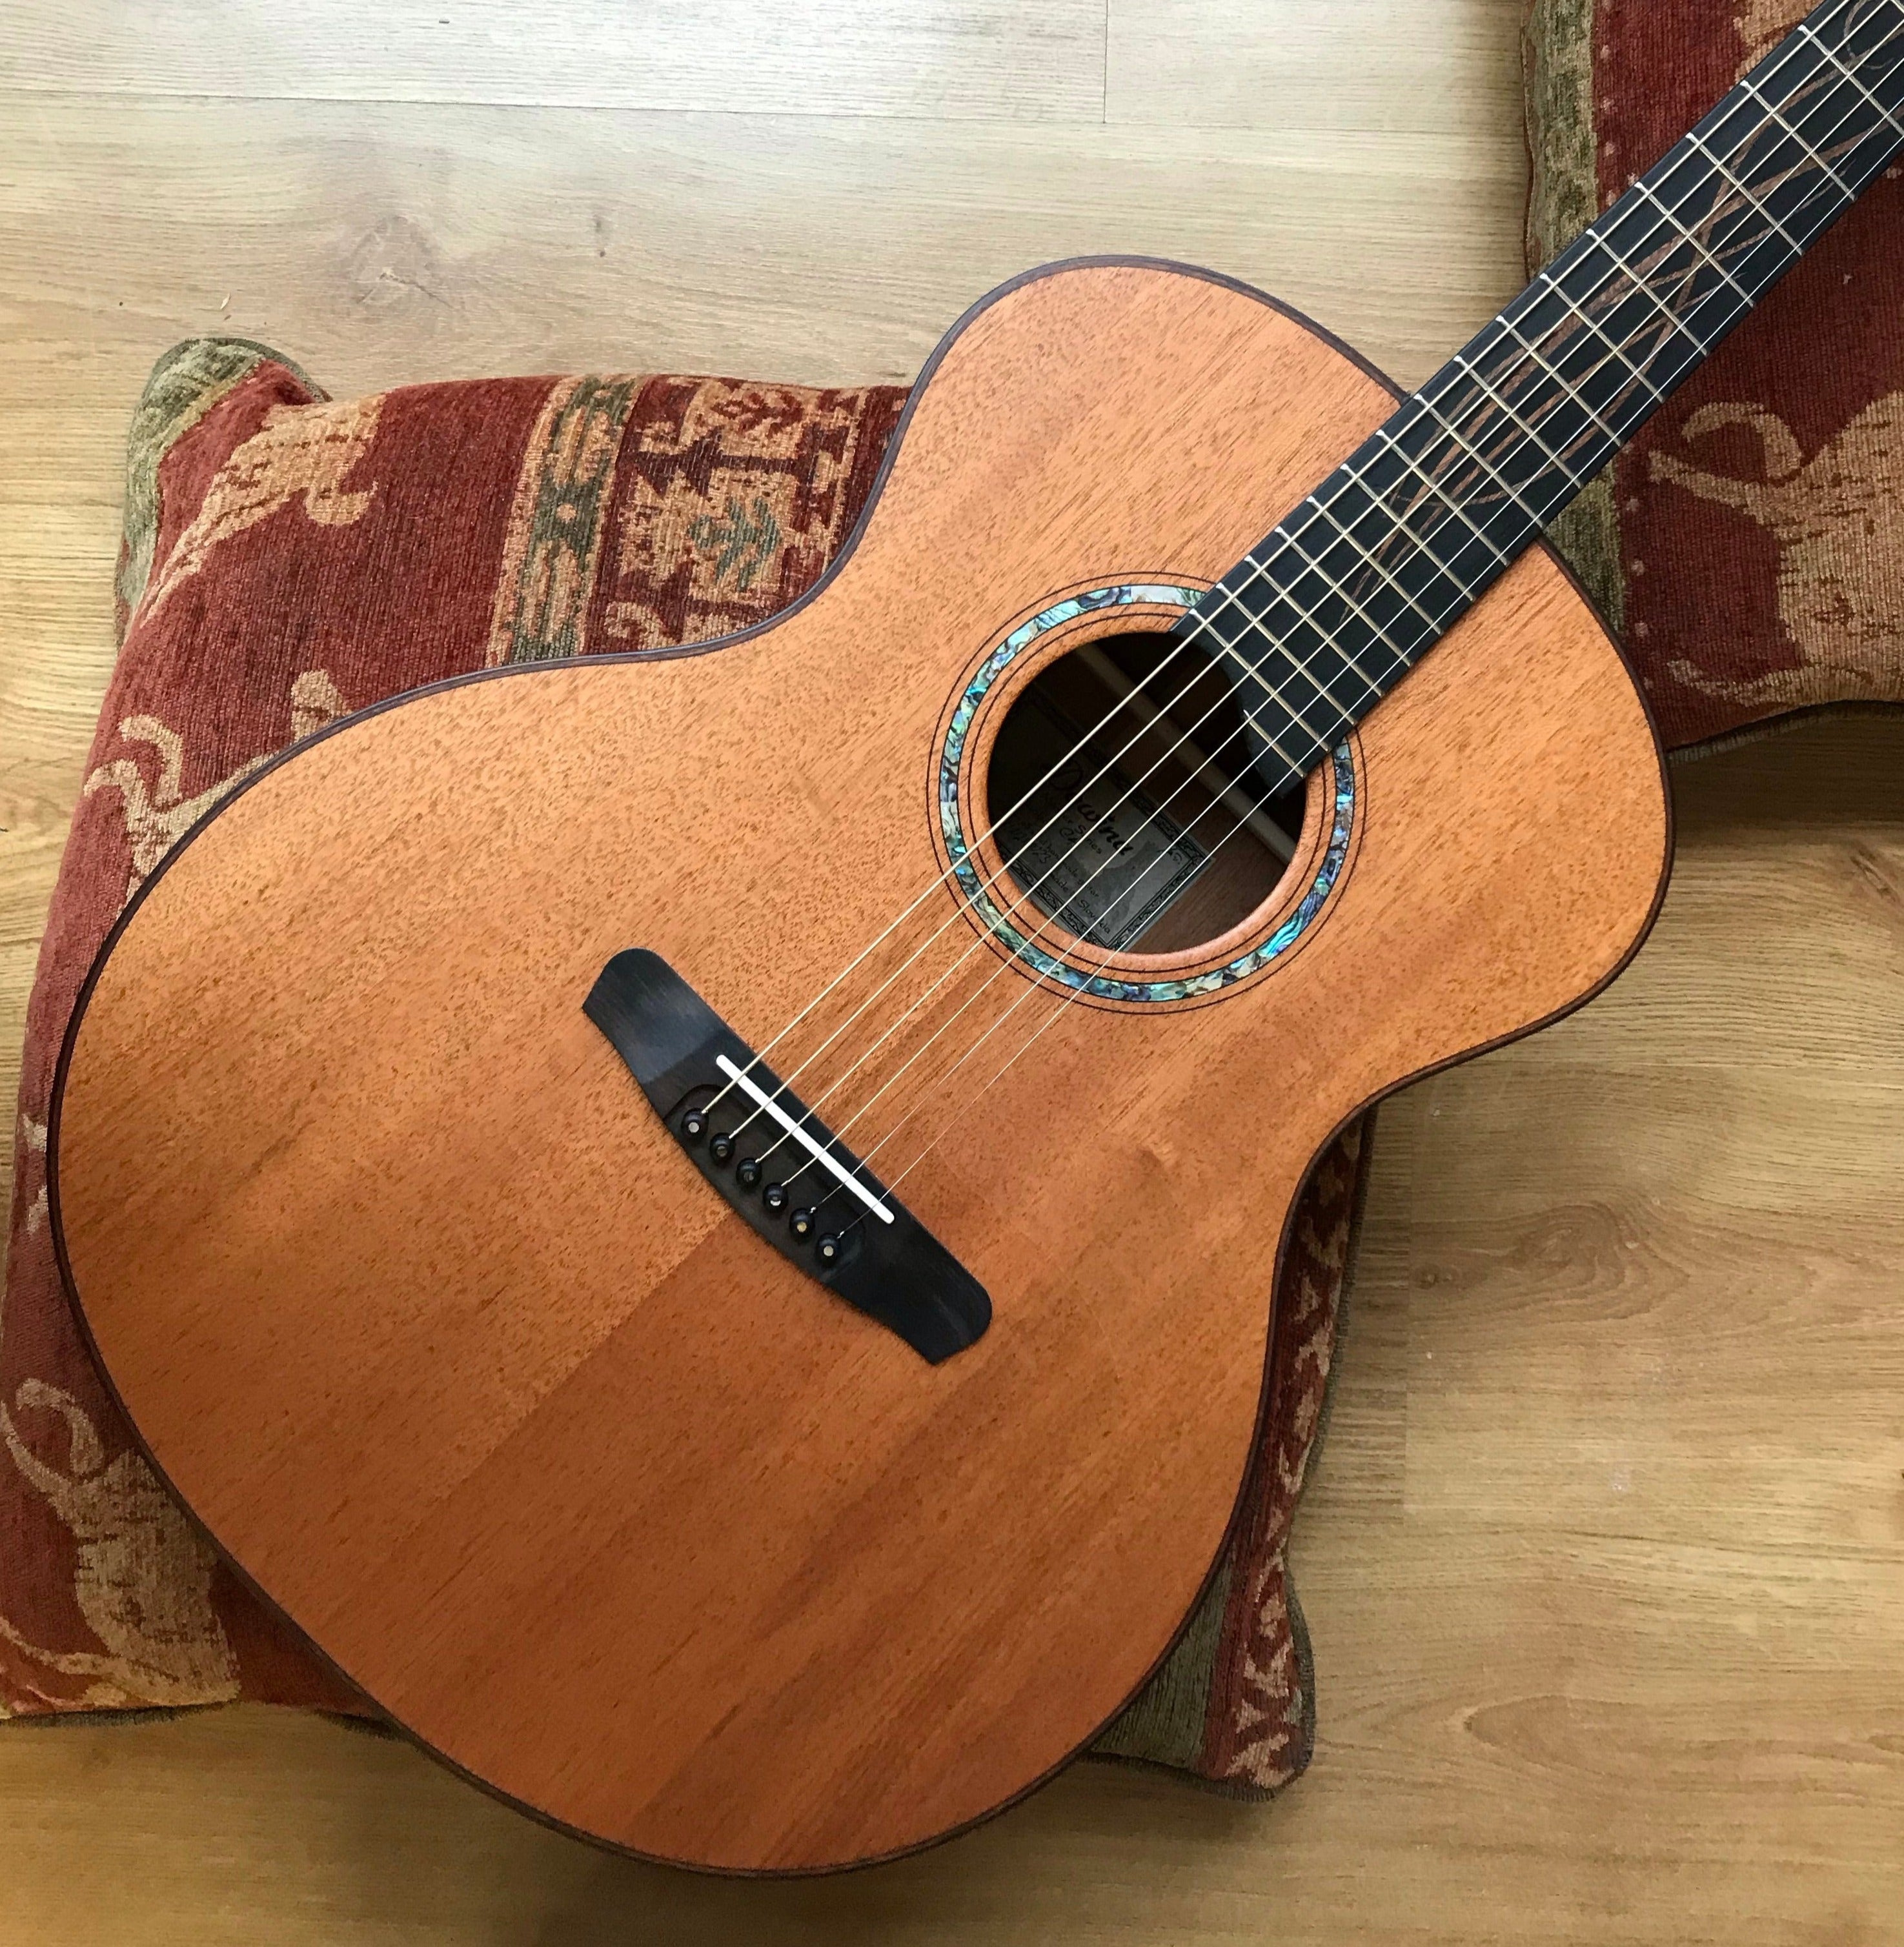 Dowina Tribute To Honduran Mahogany OMG (15+ years old), Acoustic Guitar for sale at Richards Guitars.